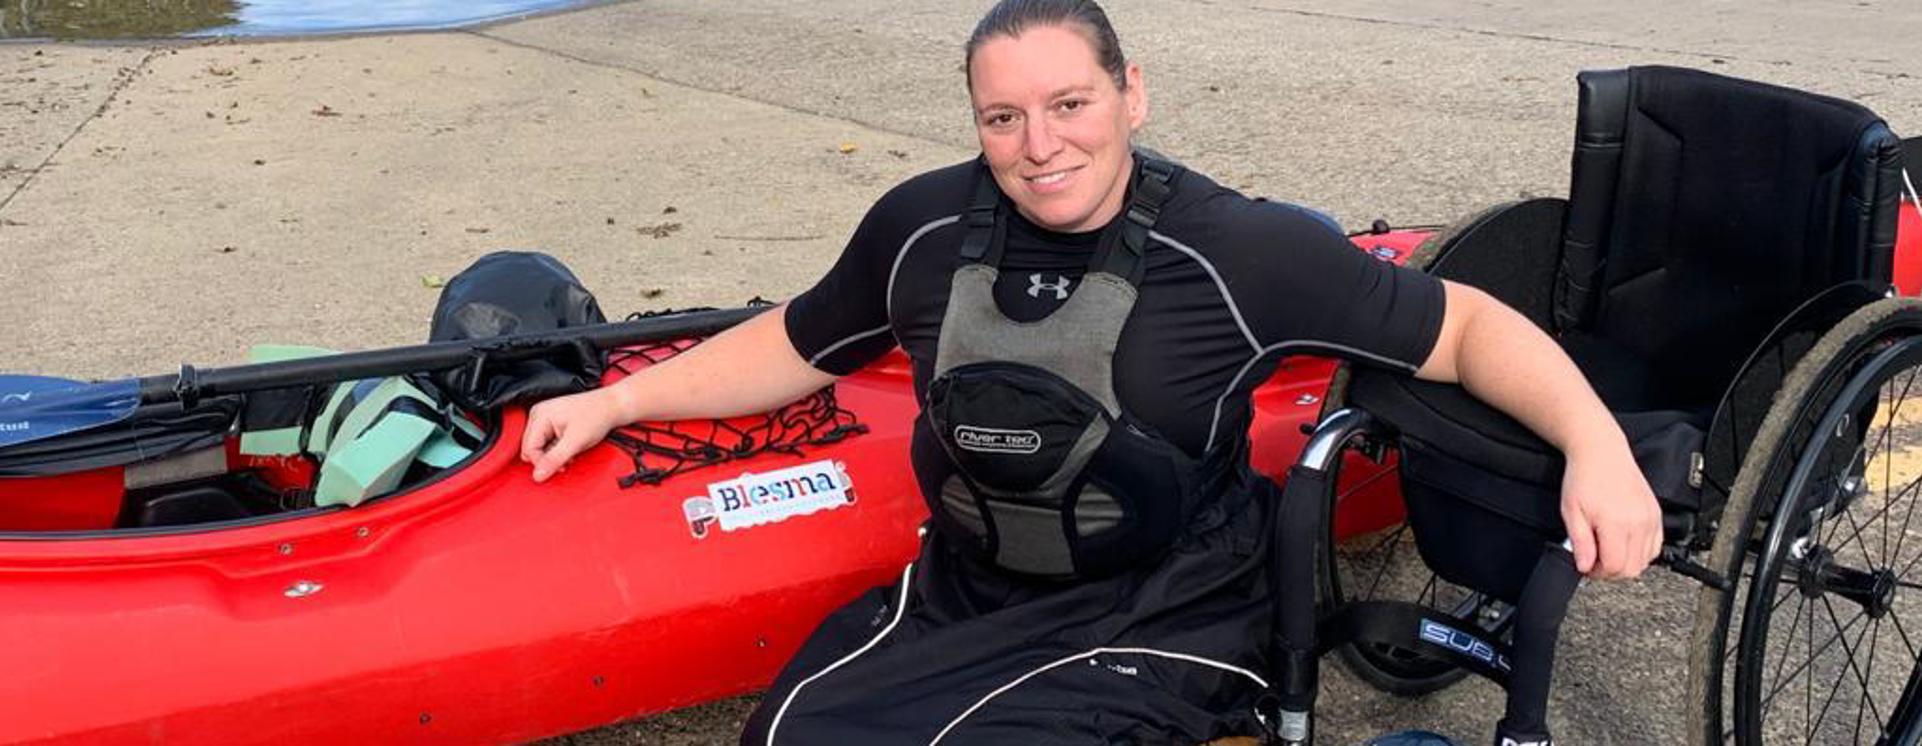 Former Army Combat medic to take on 150km kayak challenge 